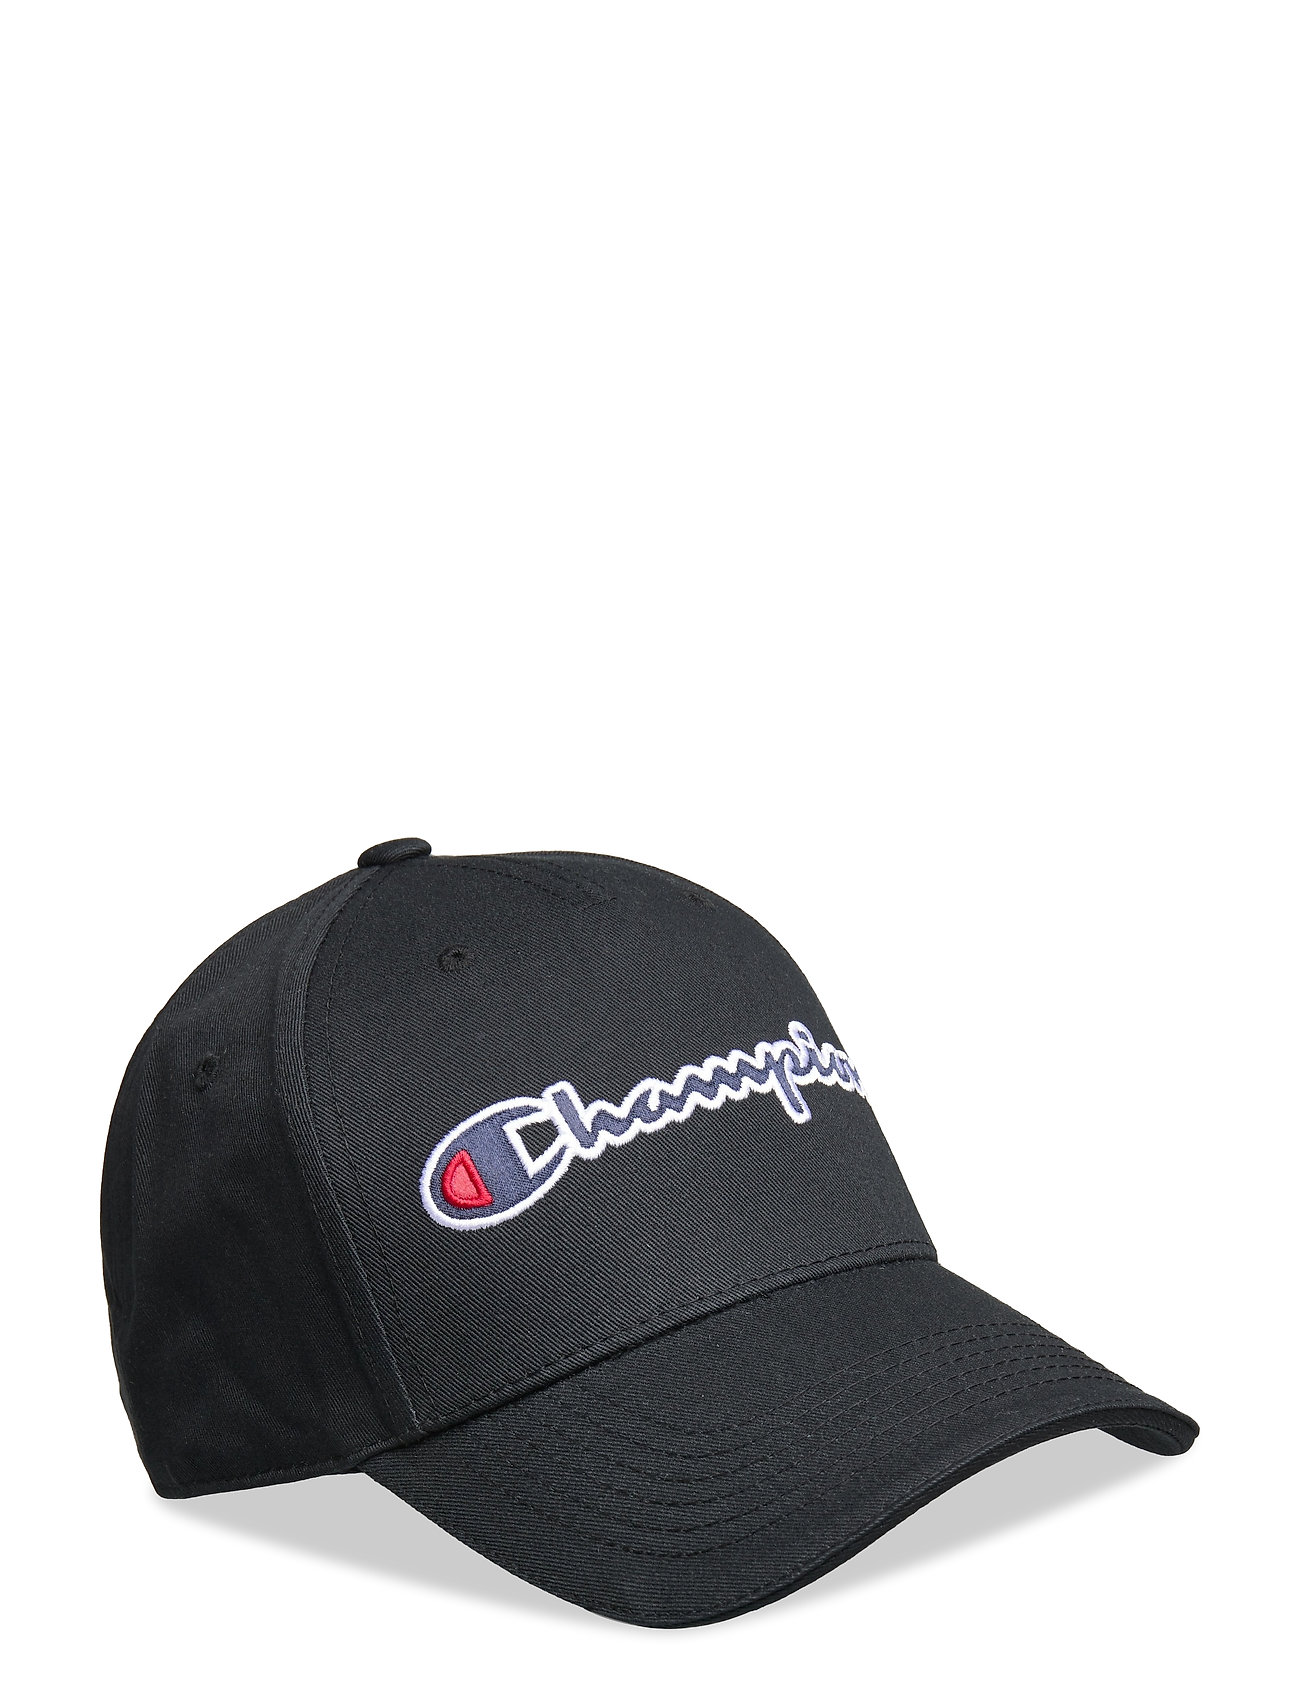 Baseball Cap Accessories Headwear Caps Musta Champion